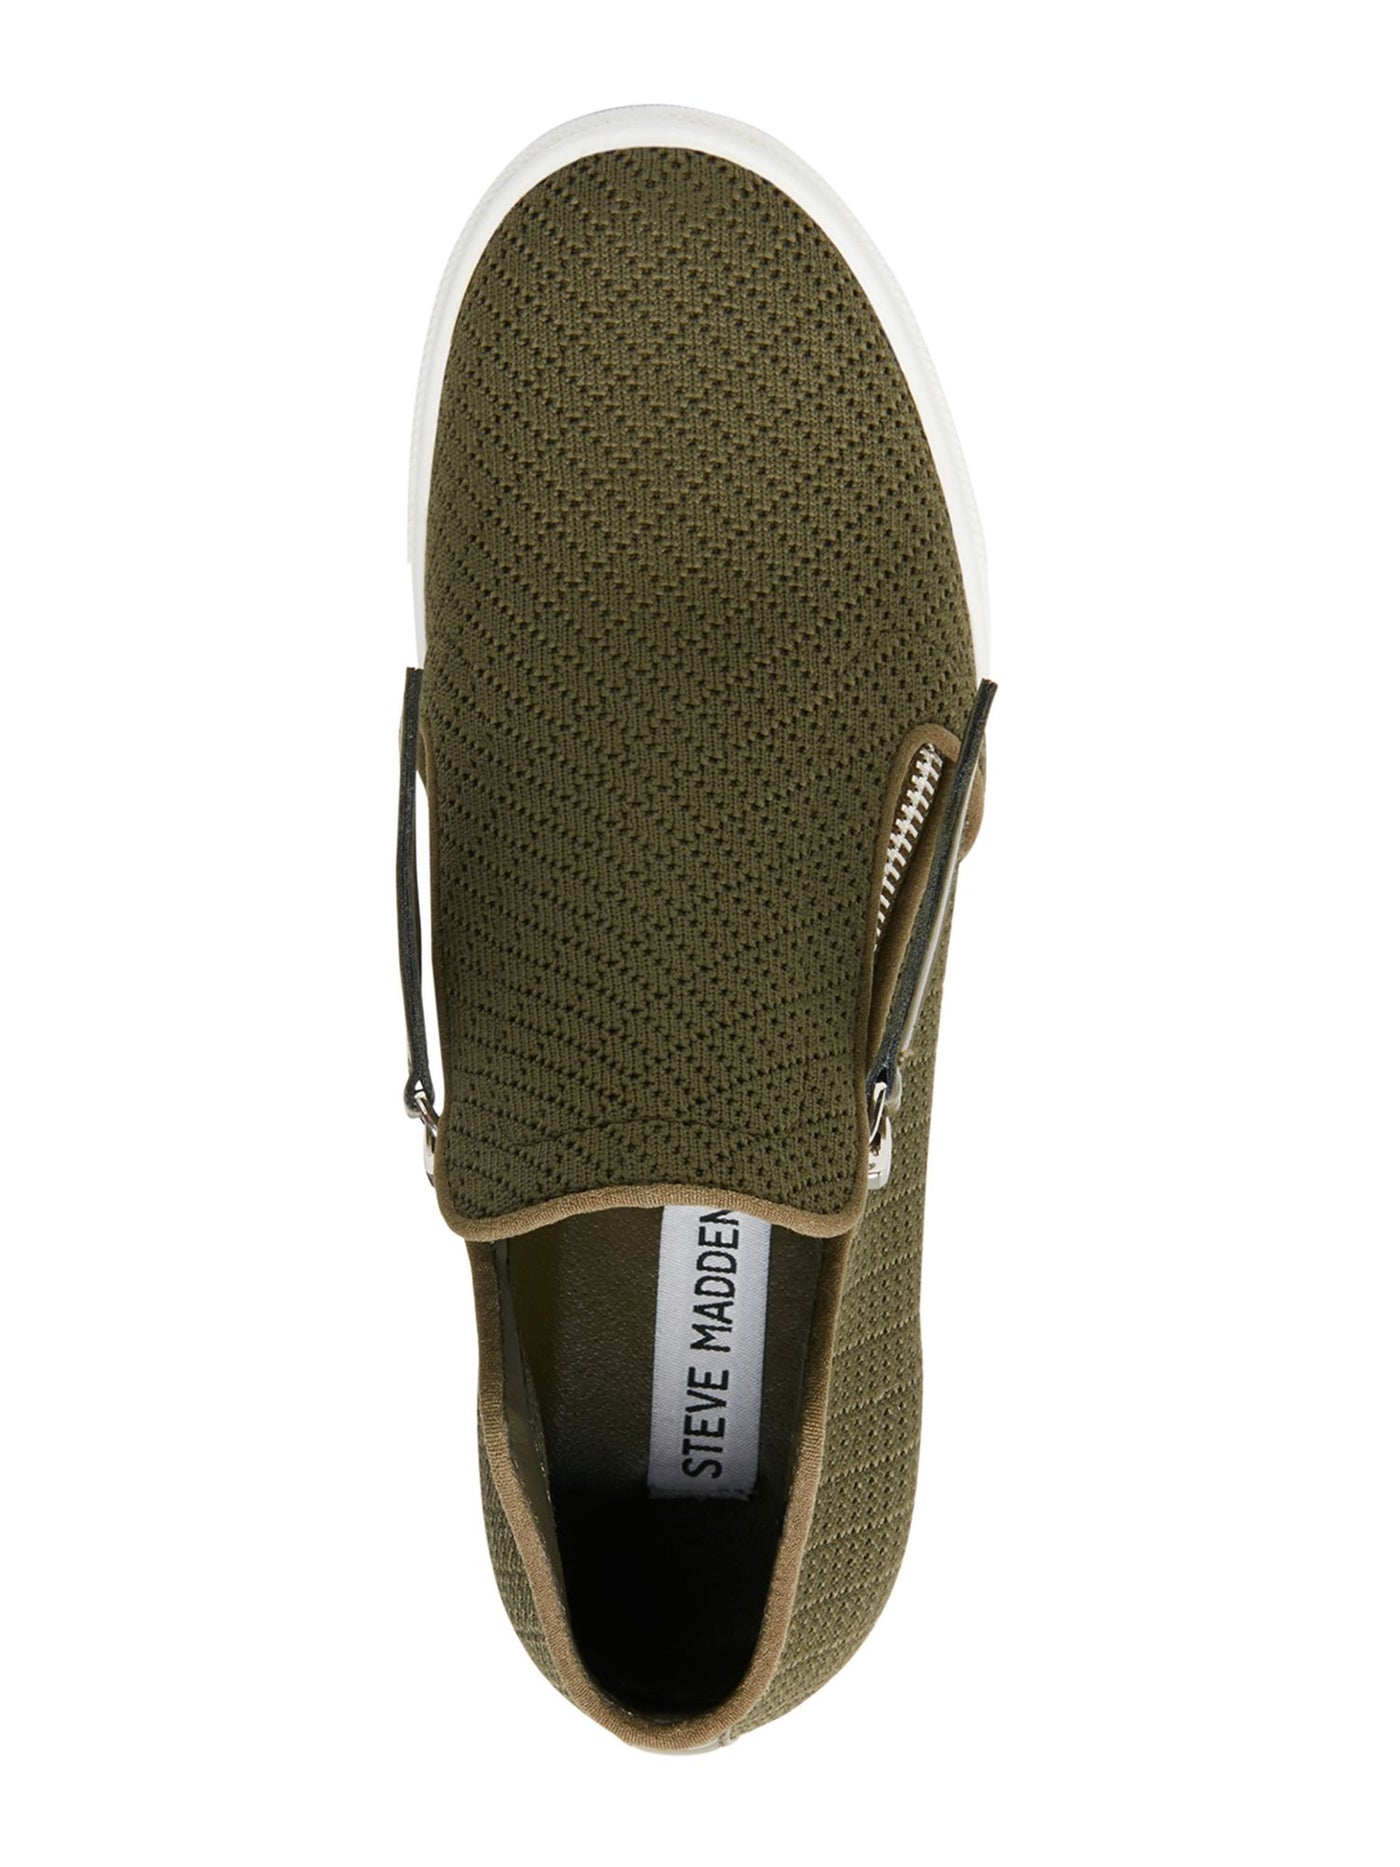 STEVE MADDEN Womens Green Knit 1" Platform Hidden Heel Camden Round Toe Wedge Athletic Sneakers Shoes 9 M